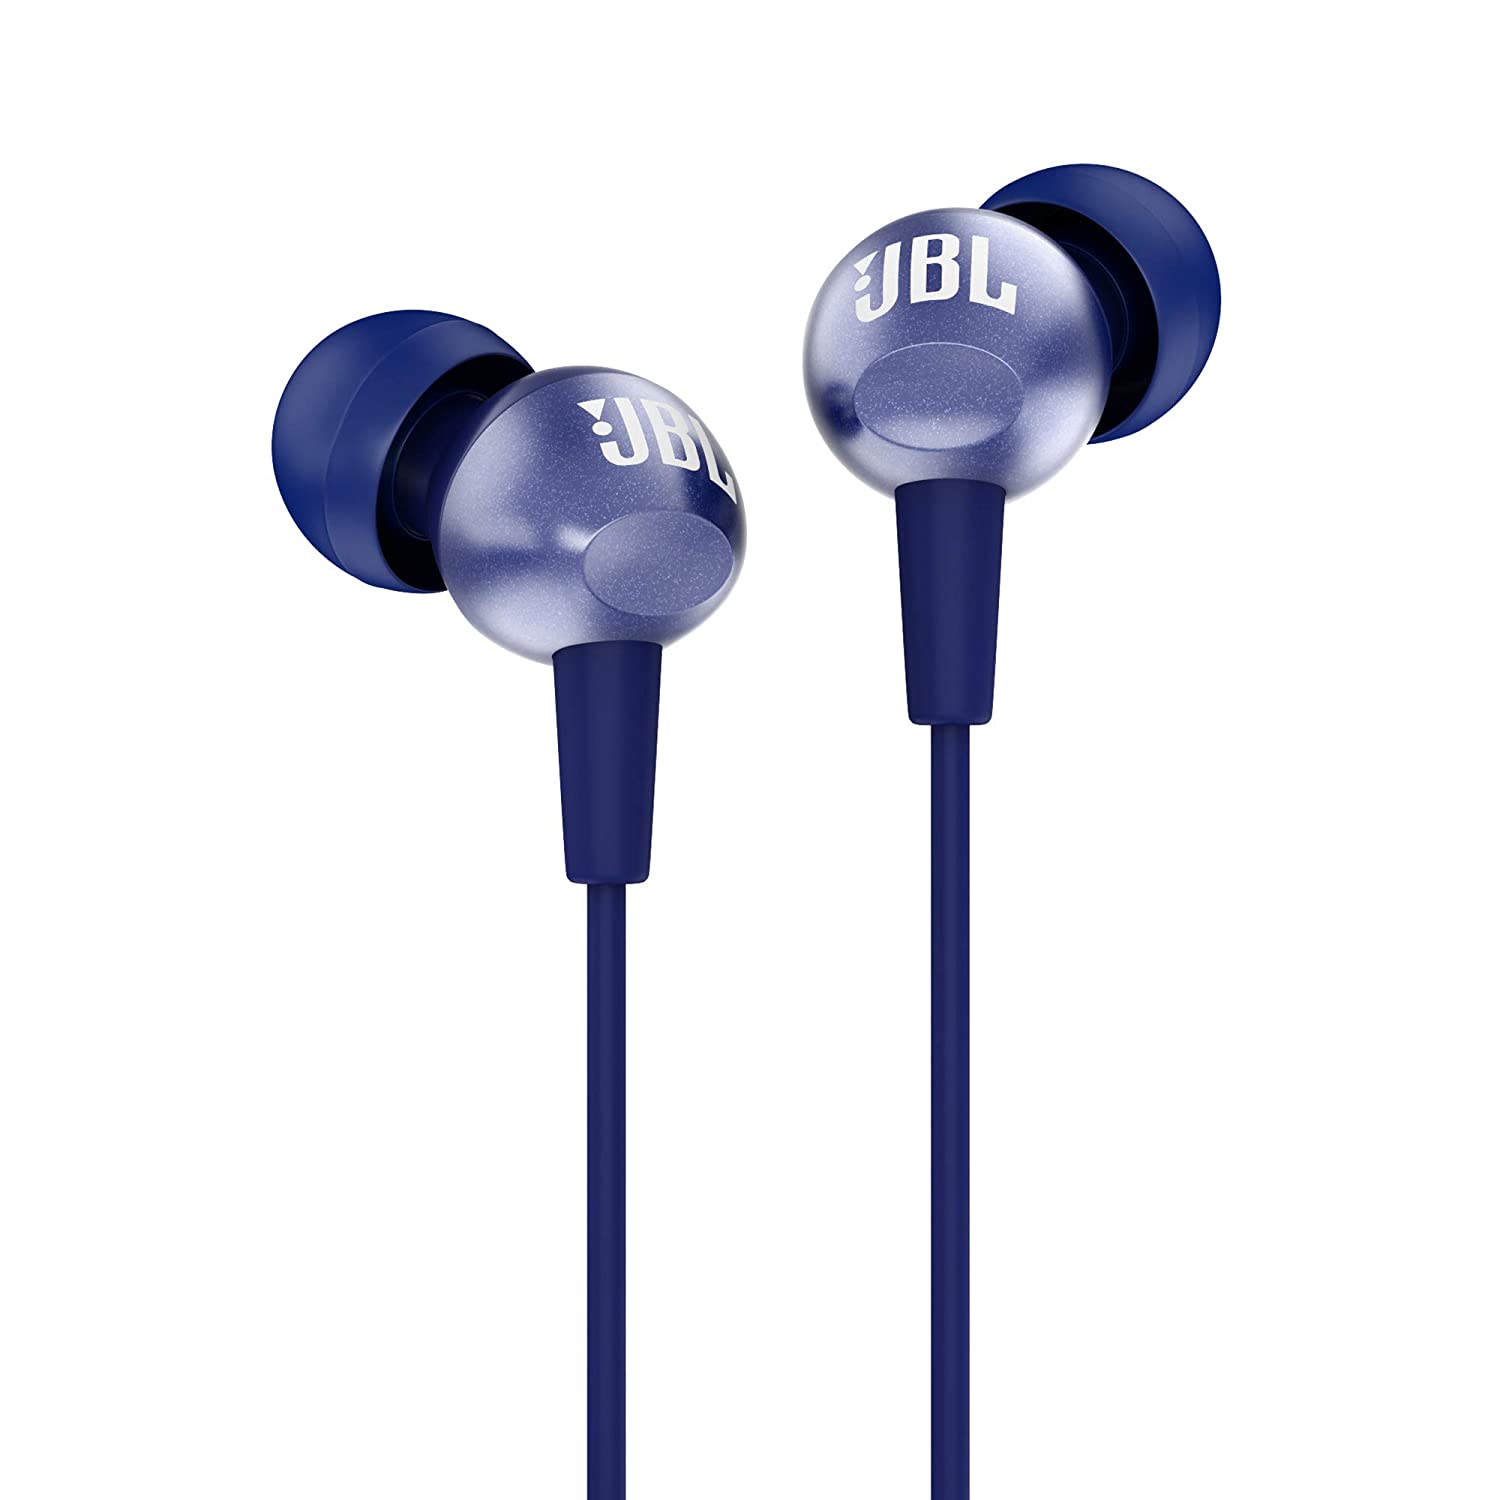 Open Box, Unused JBL C200SI Wired in Ear Earphones with Mic Blue